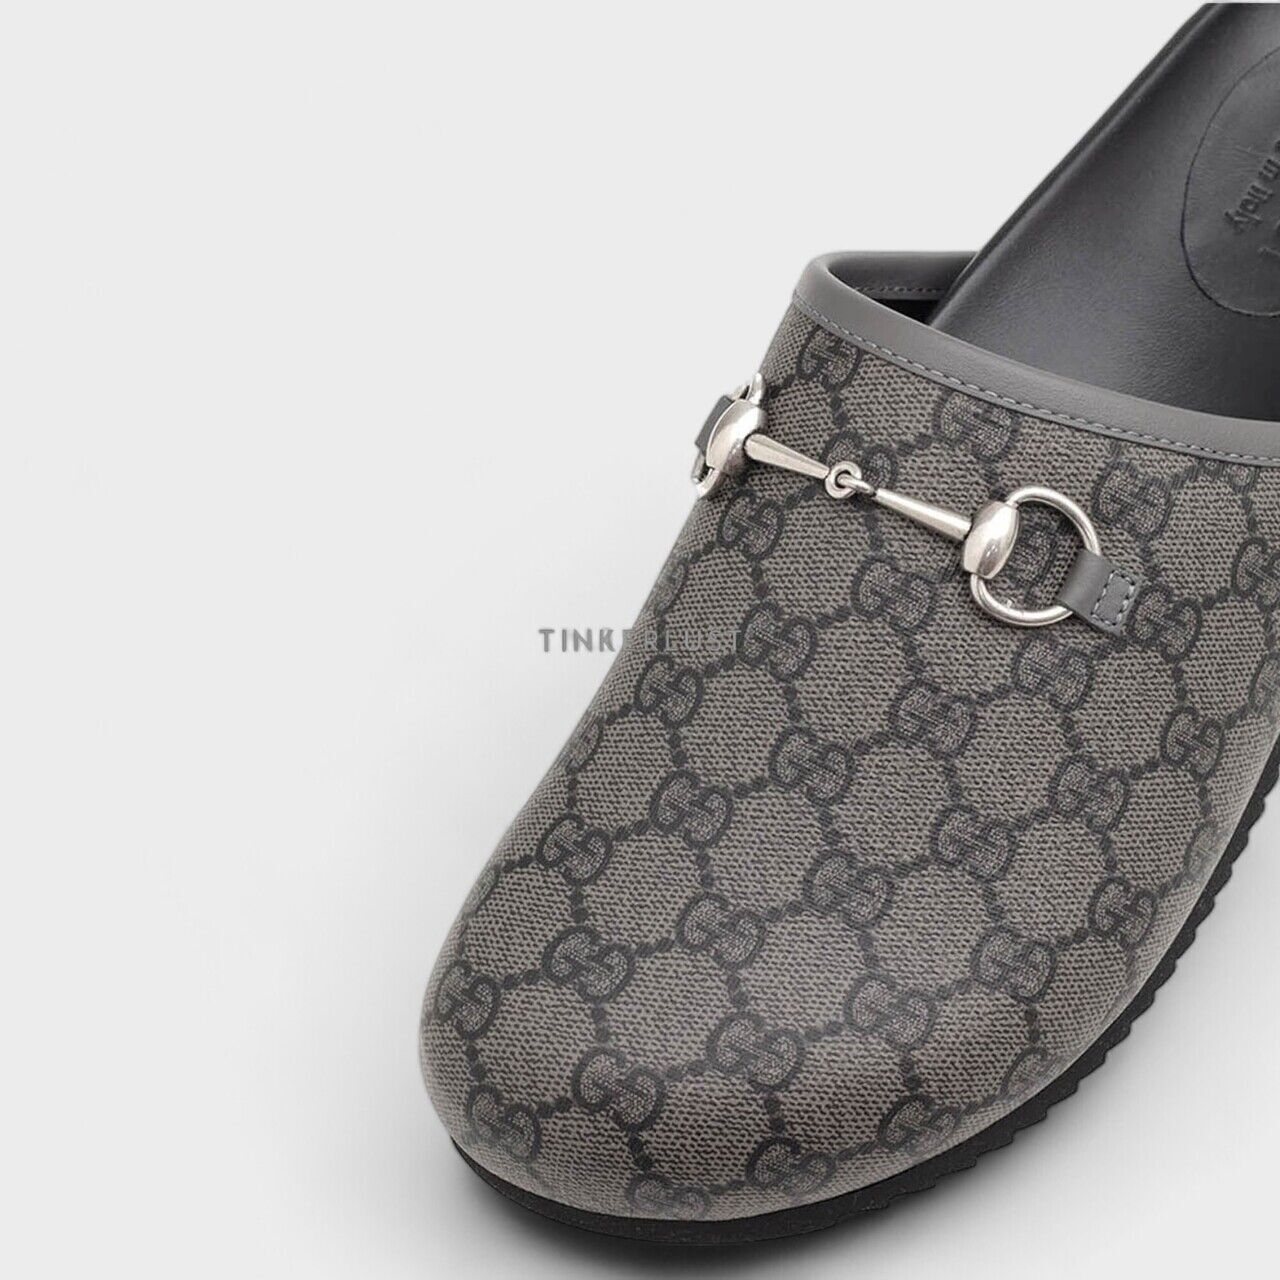 Gucci Men GG Supreme Mules in Grey/Black with Horsebit Sandals